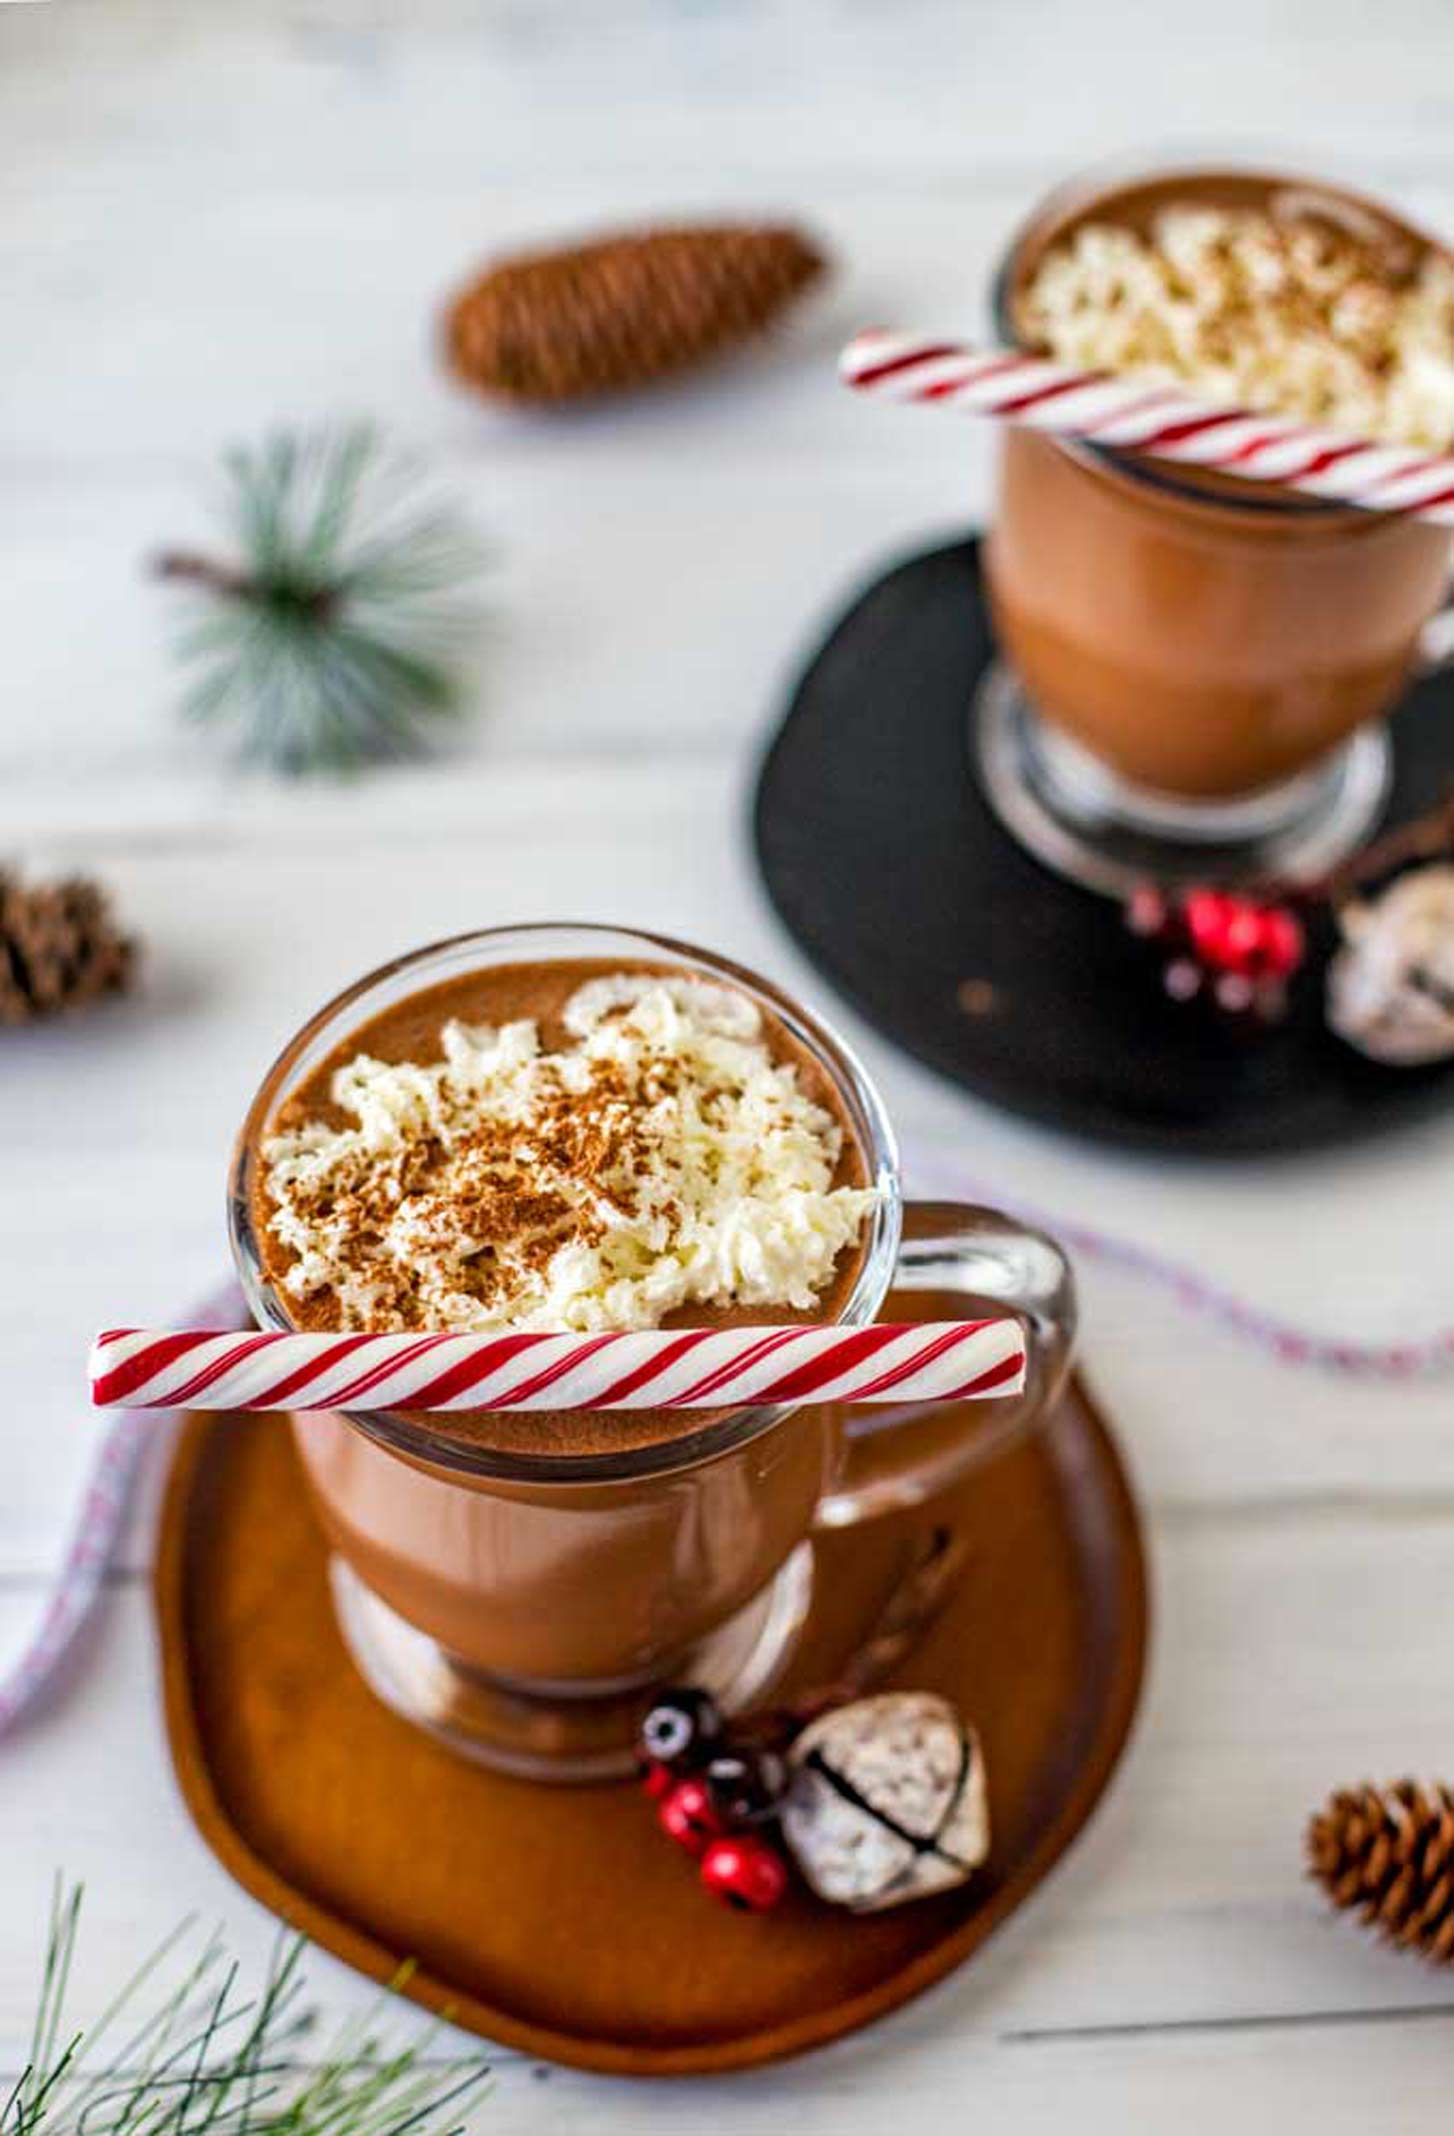 https://wendypolisi.com/wp-content/uploads/2020/11/crock-pot-hot-chocolate-2.jpg